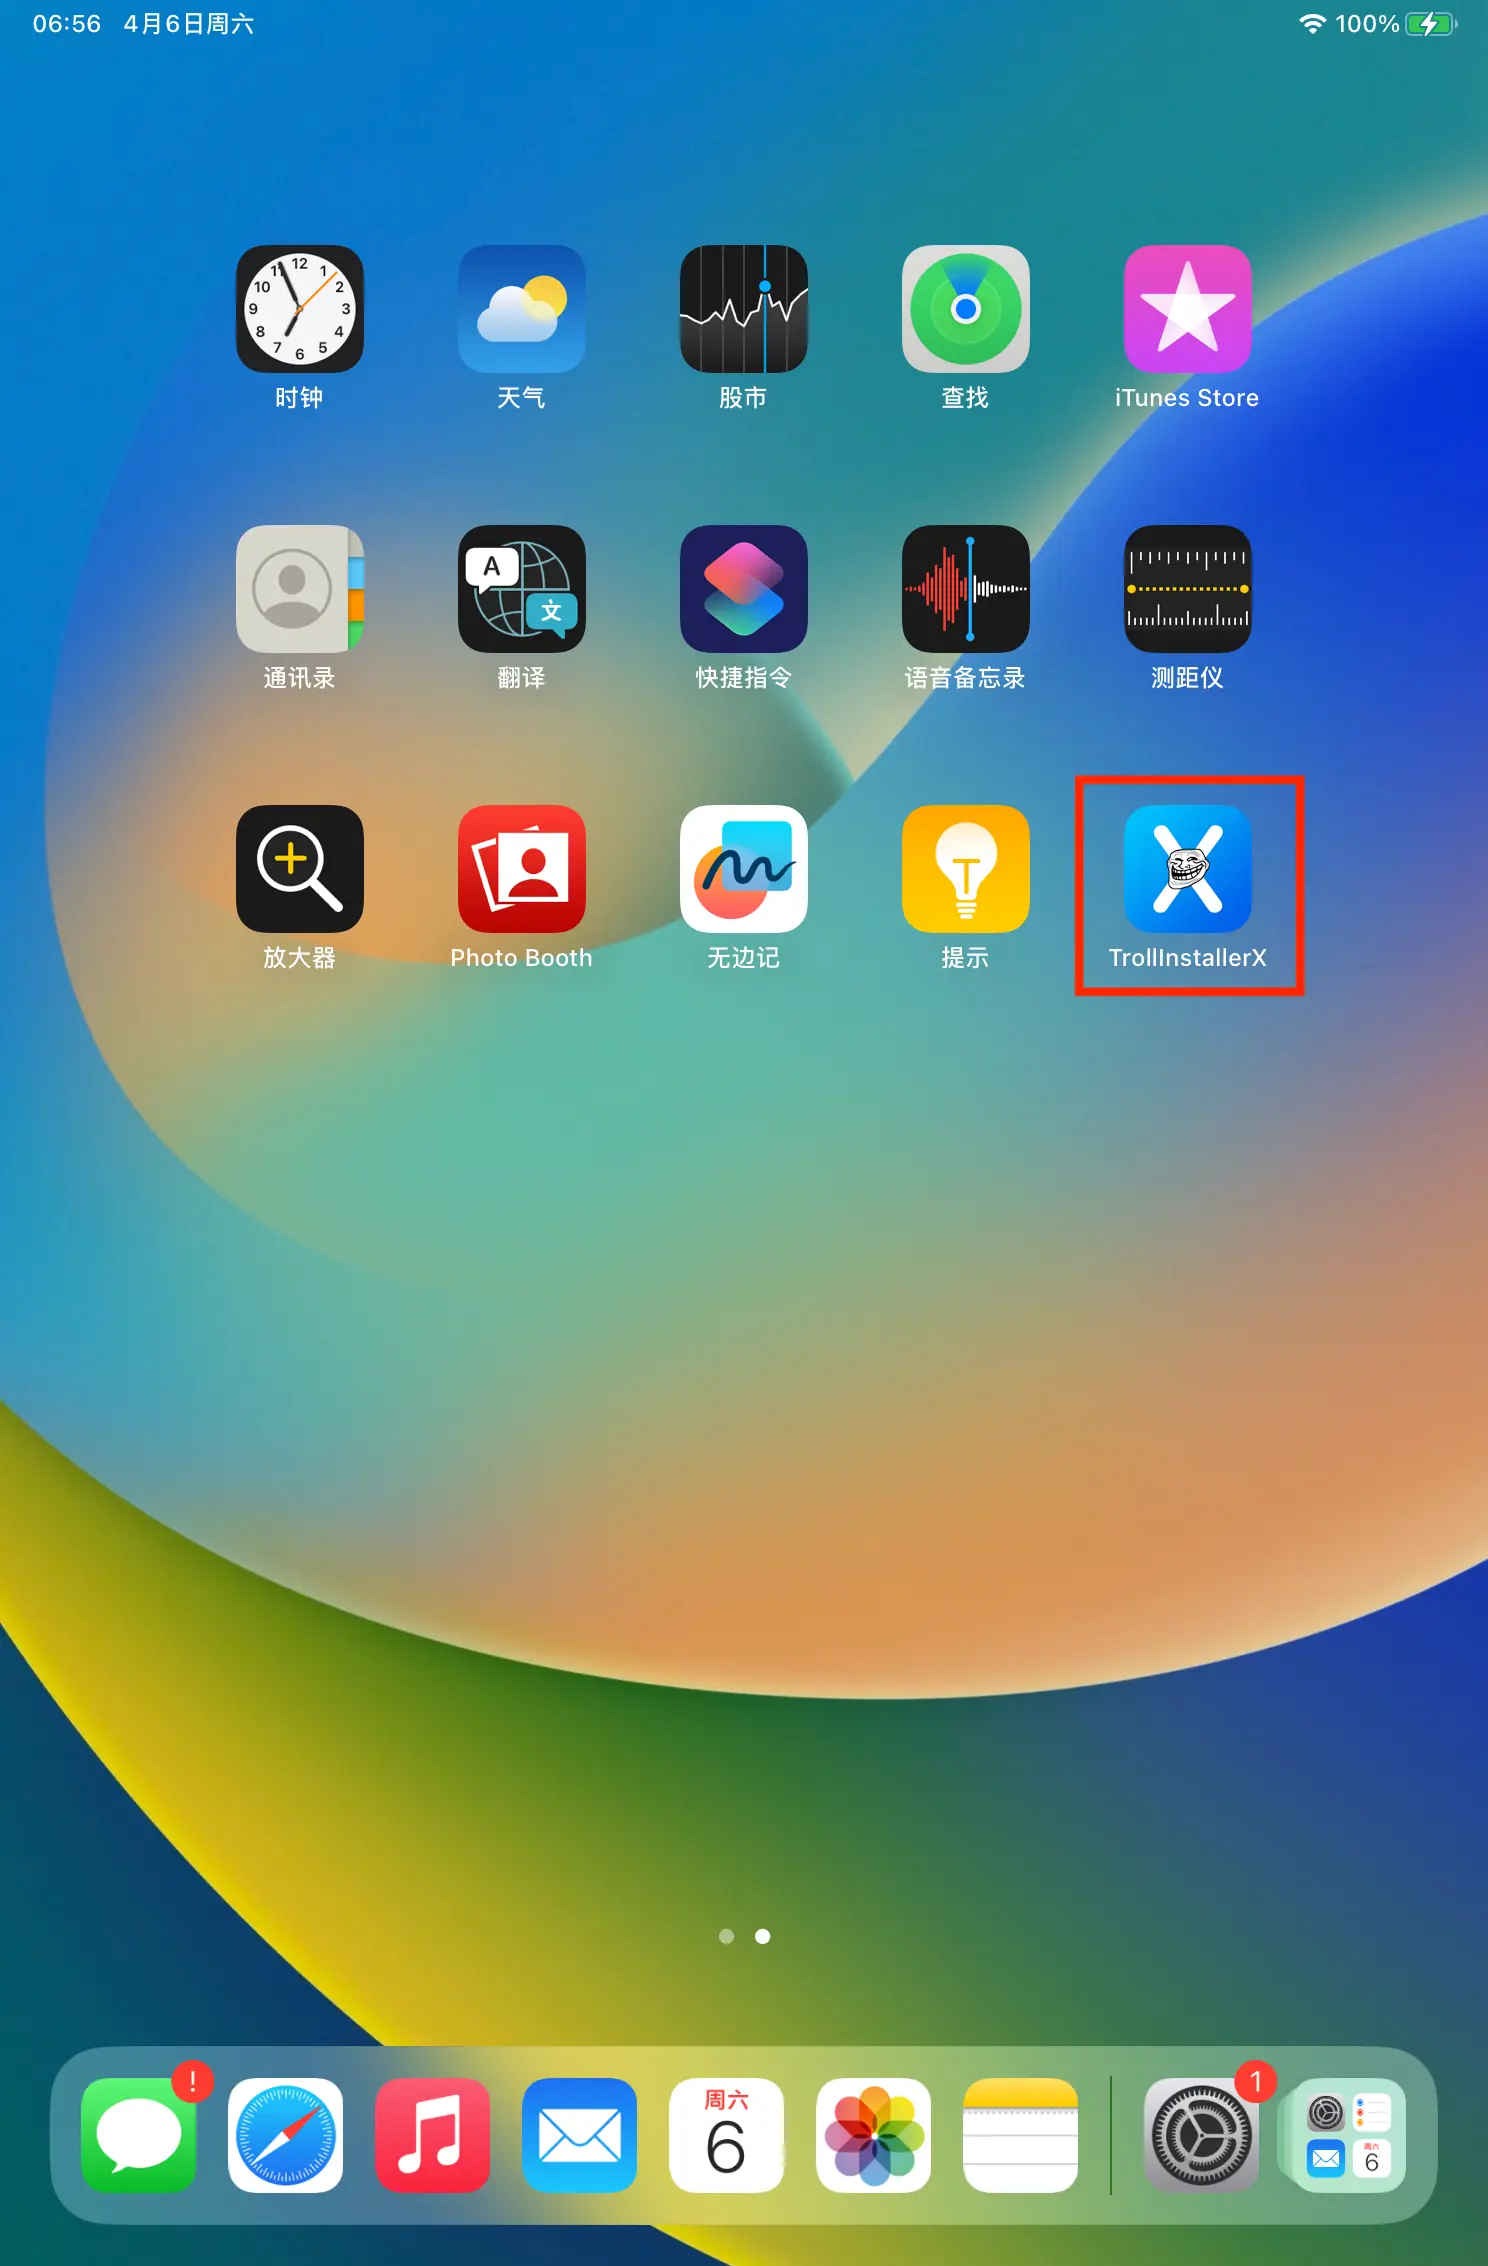 ipad-main-screen-trollinstallerx-app-icon